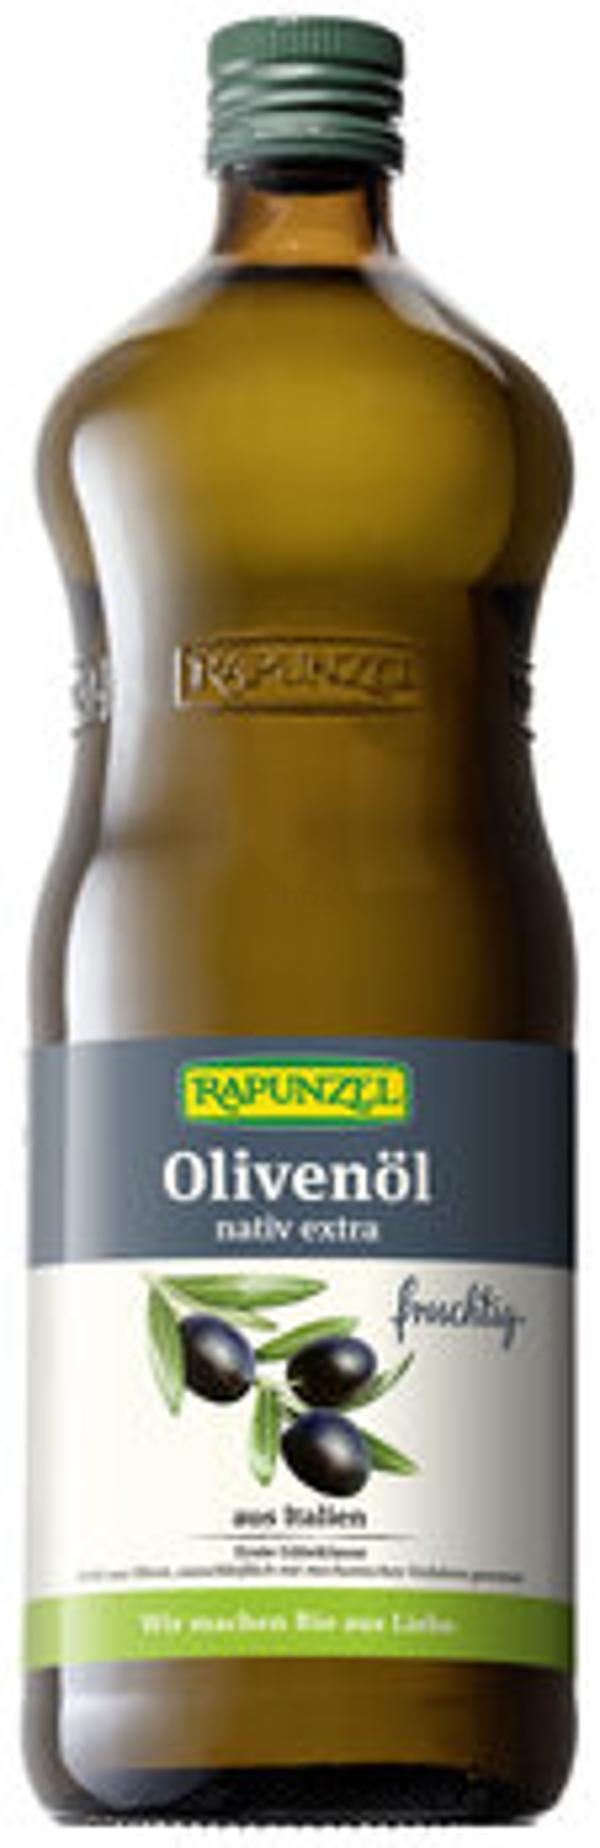 Produktfoto zu Olivenöl nativ extra 1 Liter